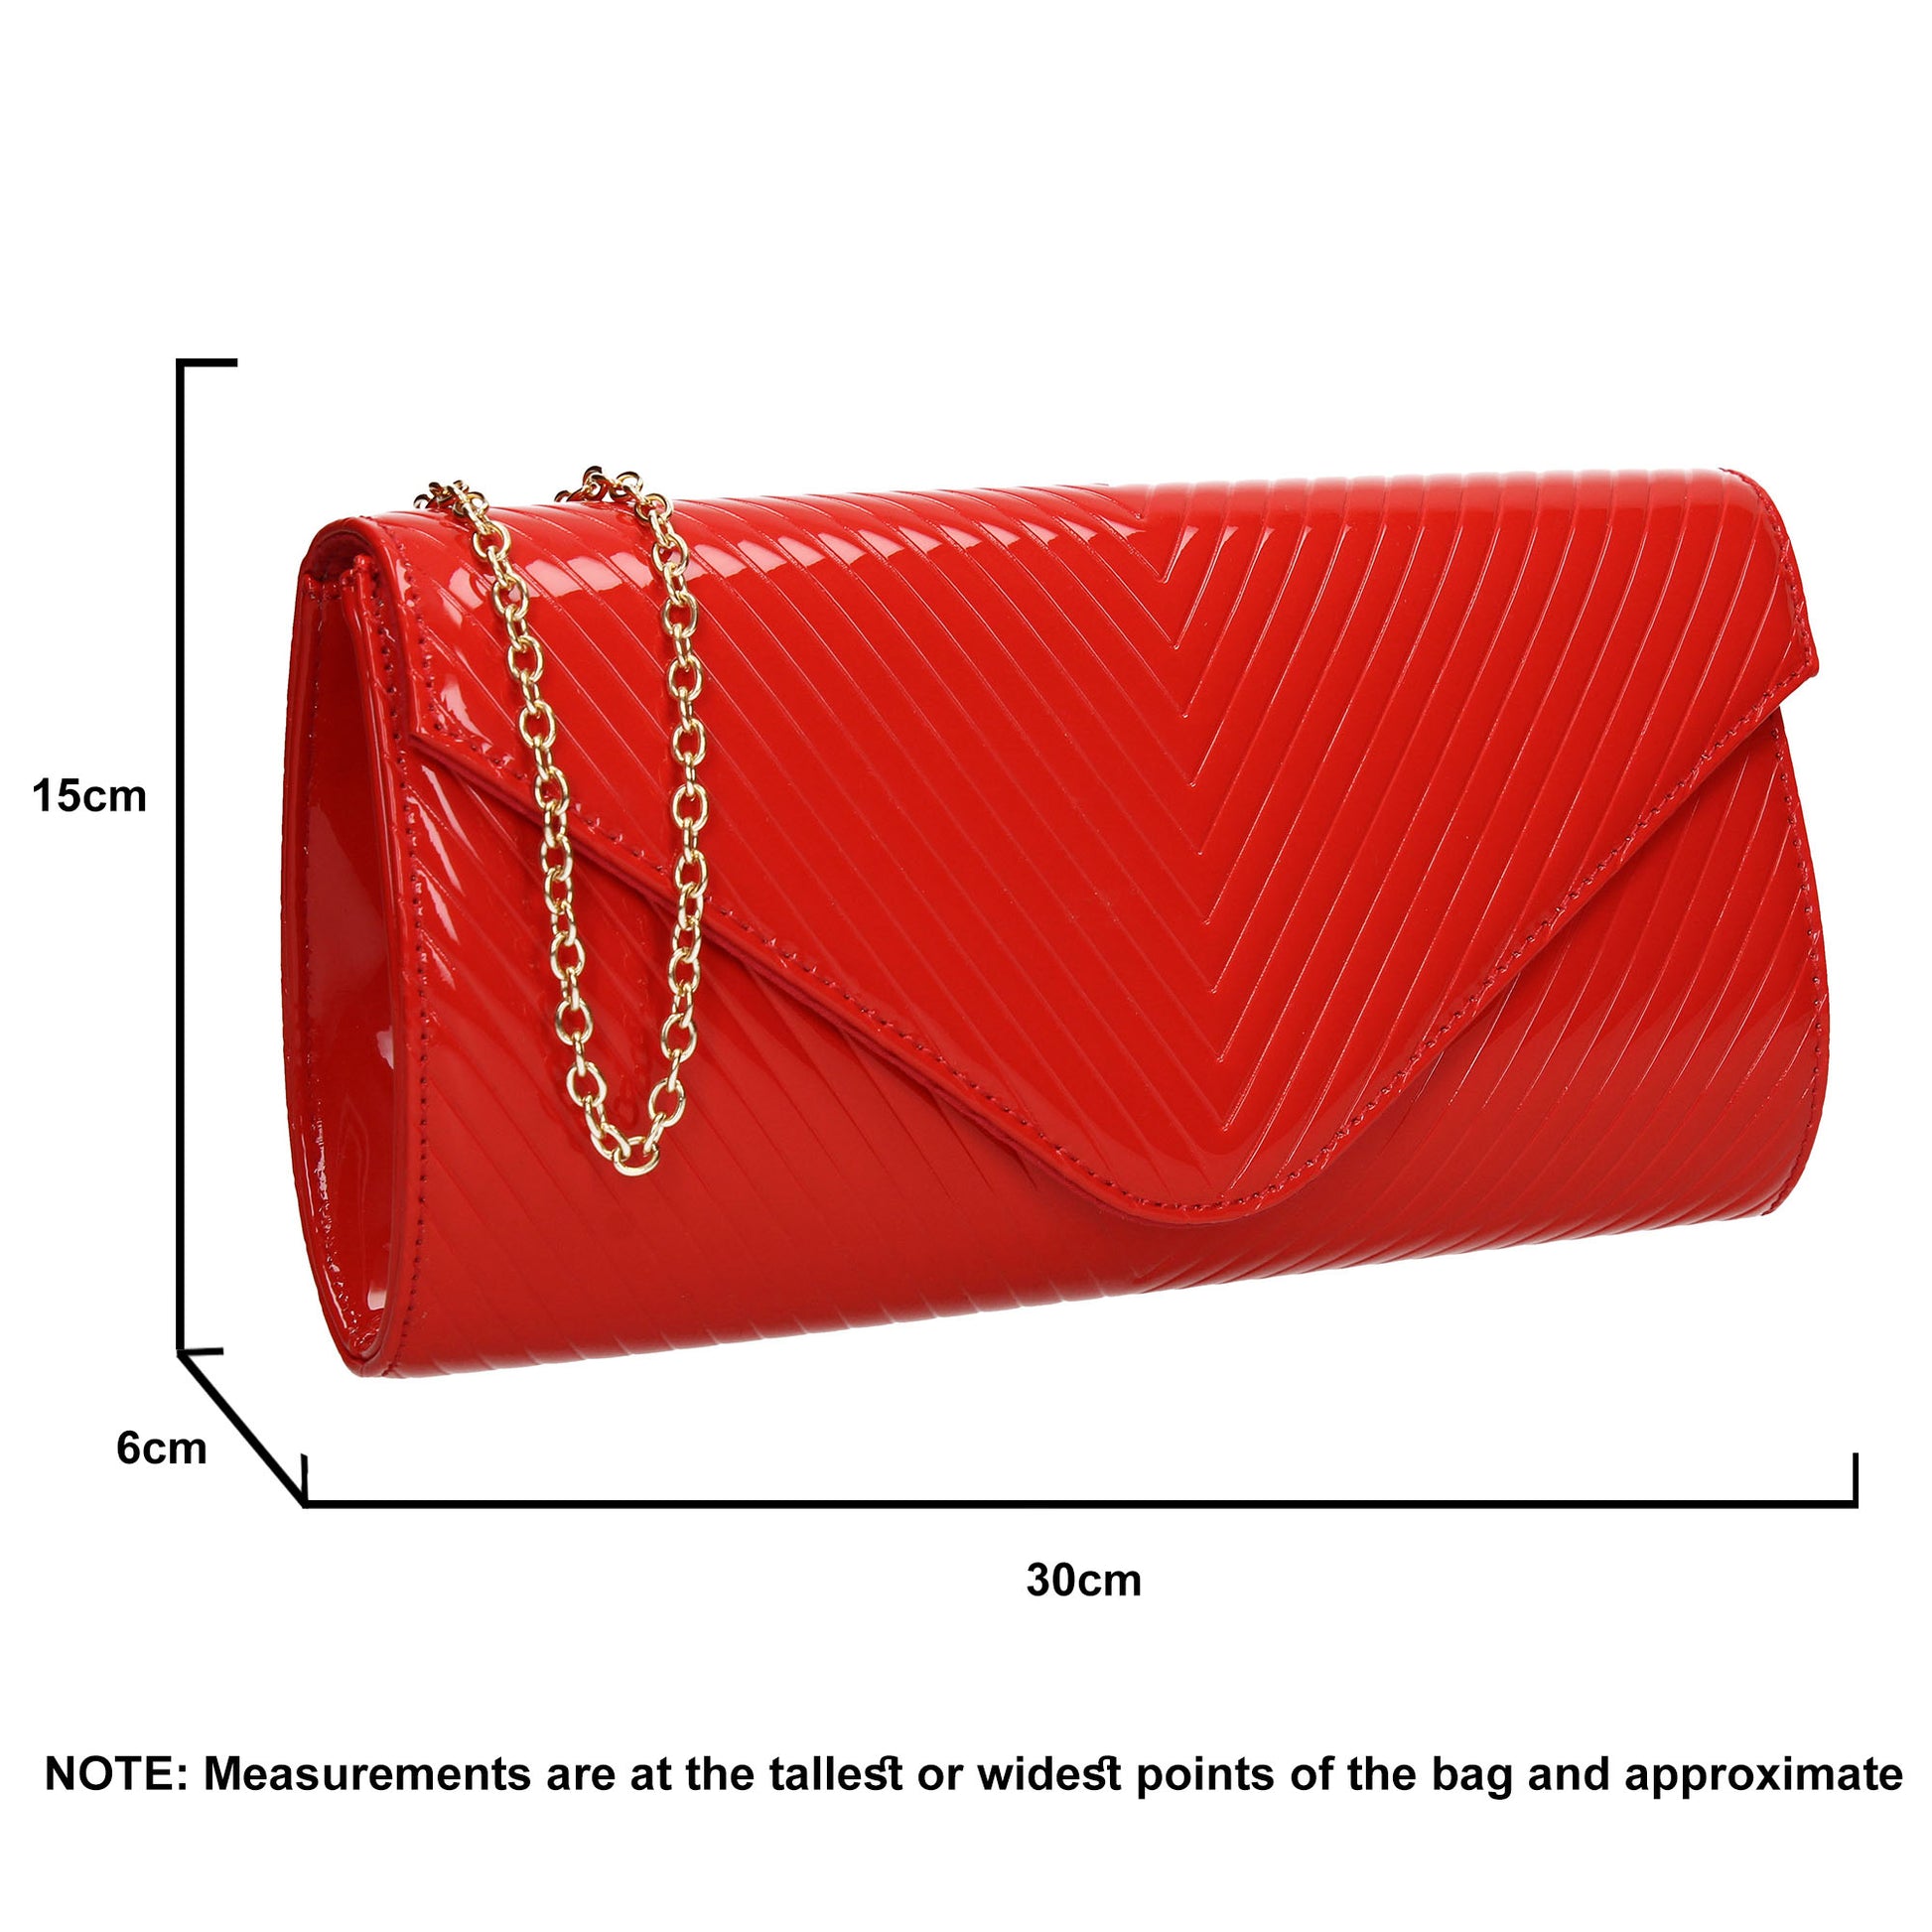 SWANKYSWANS Vanesa Clutch Bag Red Cute Cheap Clutch Bag For Weddings School and Work